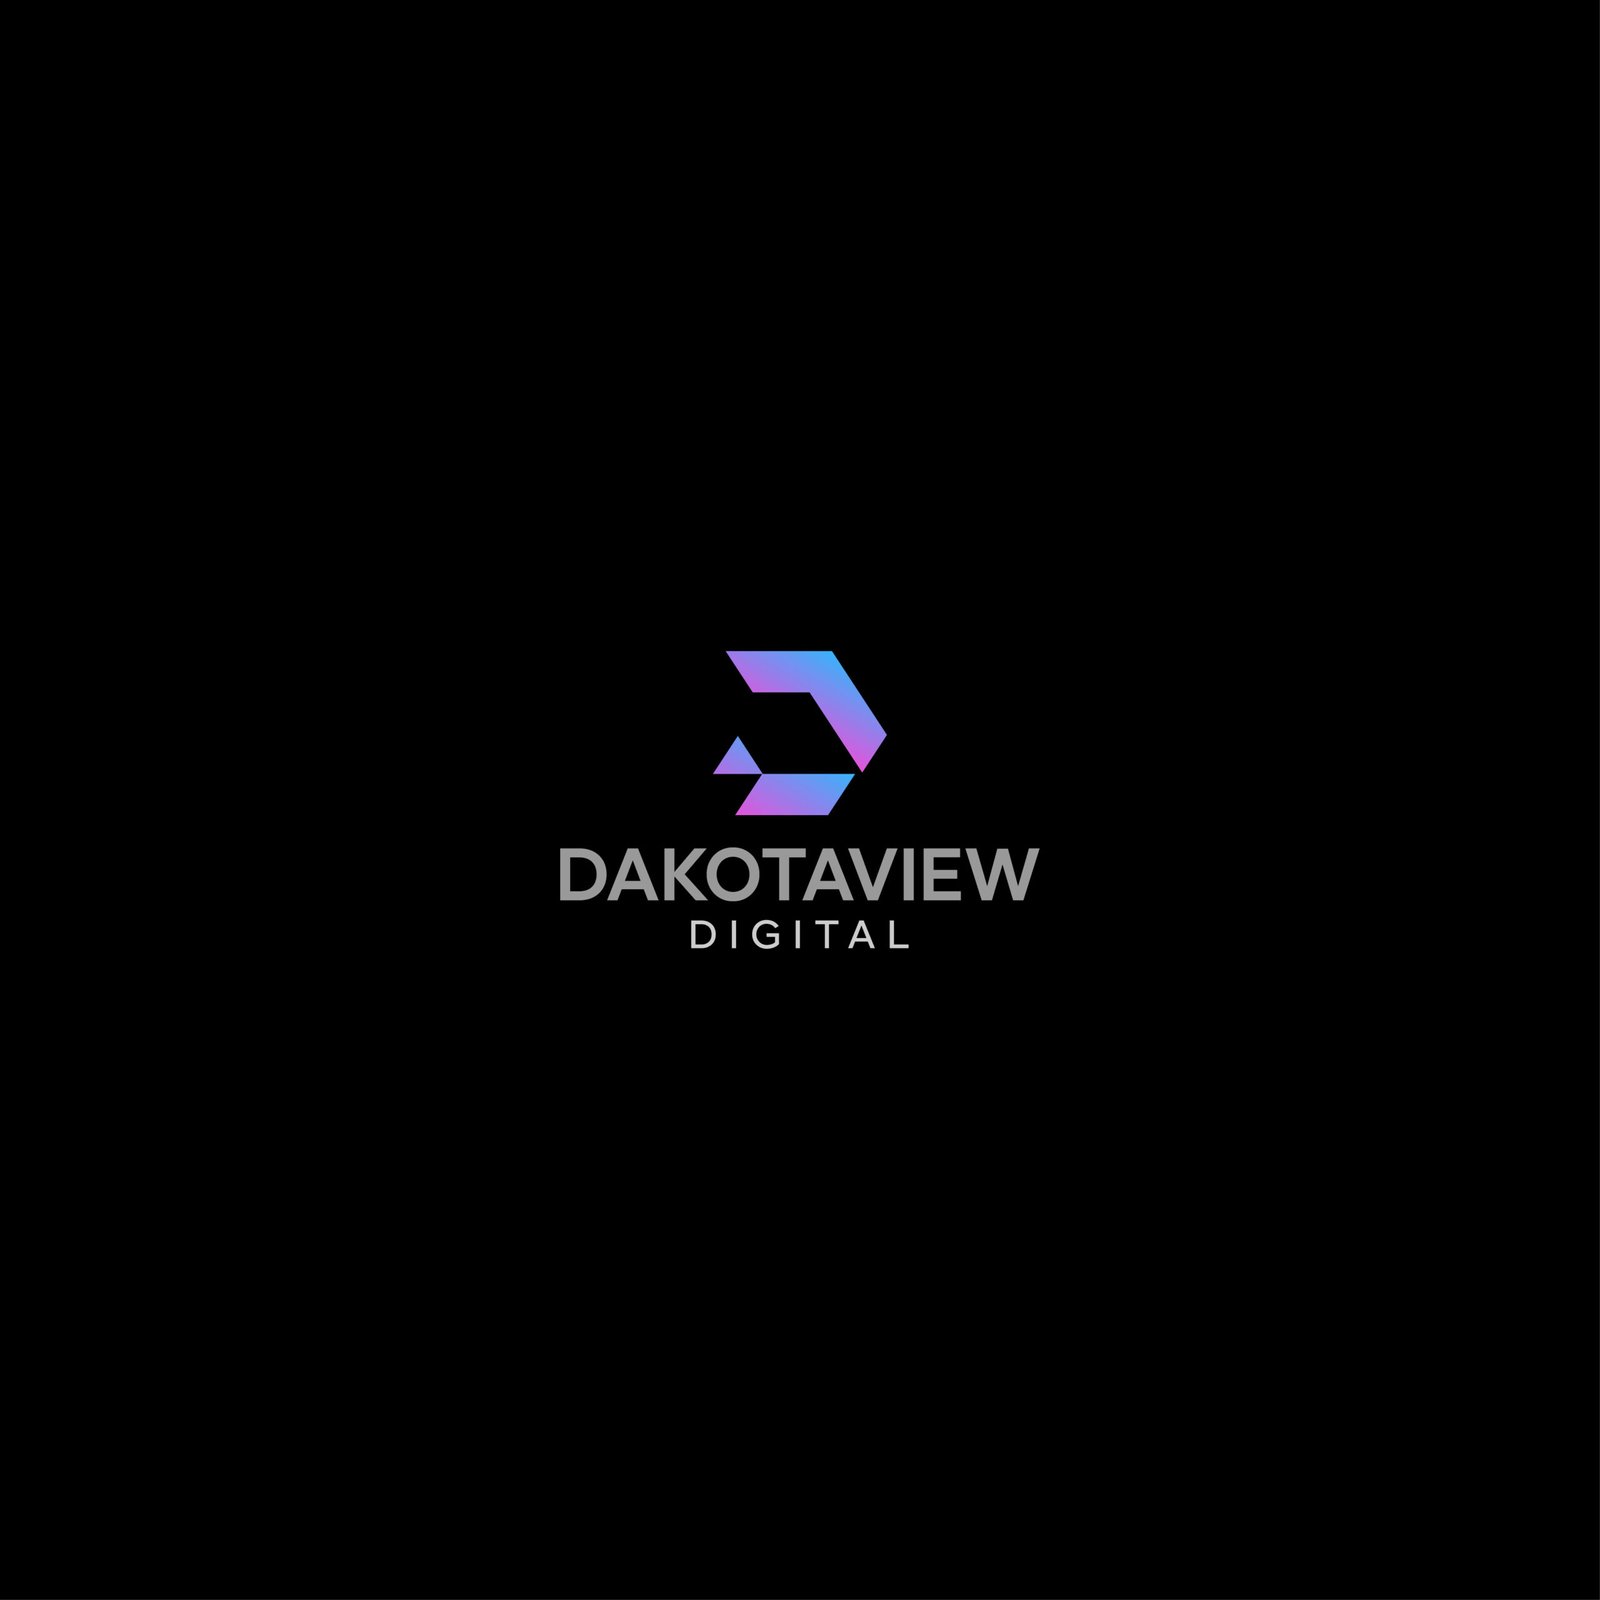 Dakotaview Digital